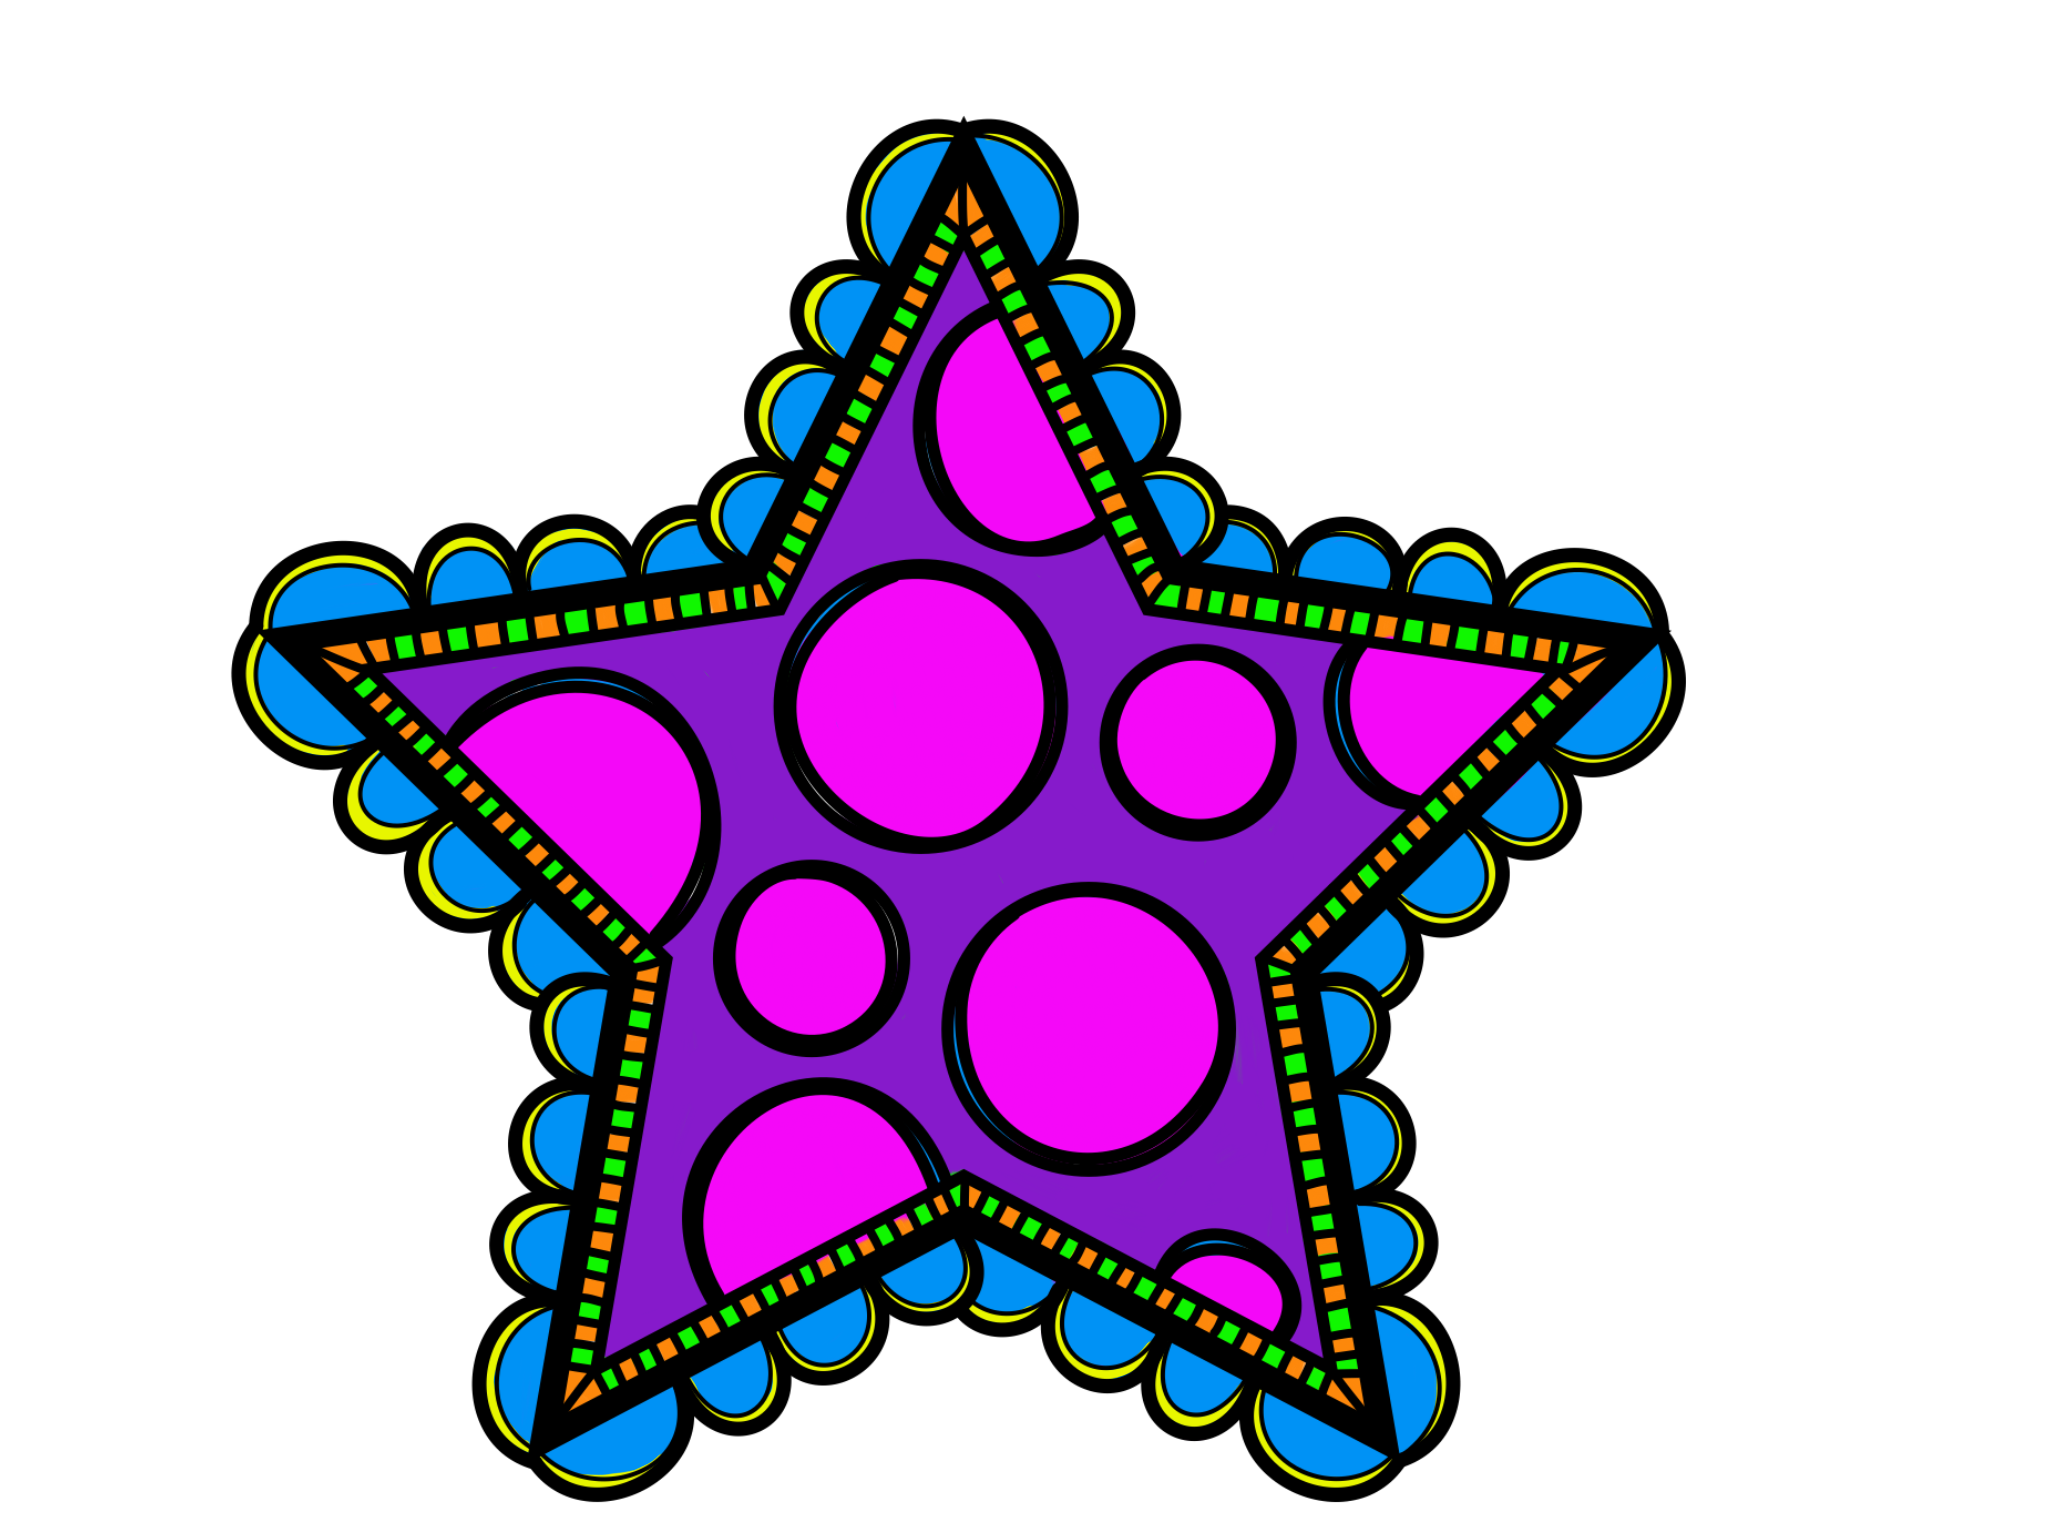 clipart stars preschool